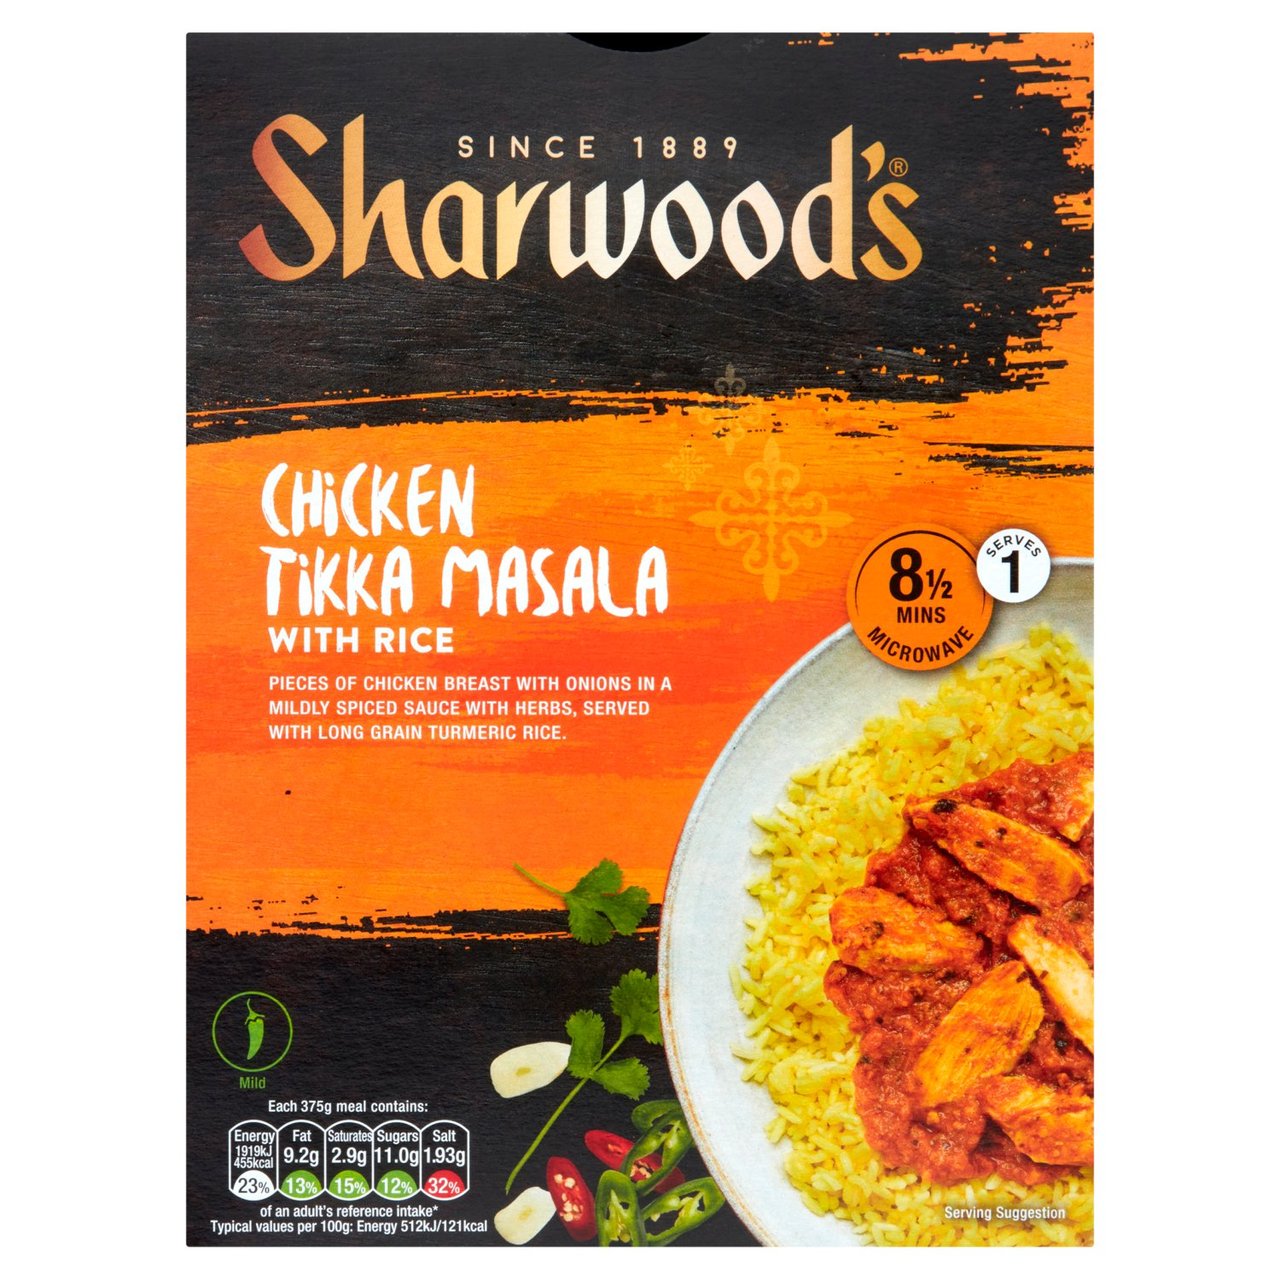 Sharwood's Chicken Tikka Masala with Rice